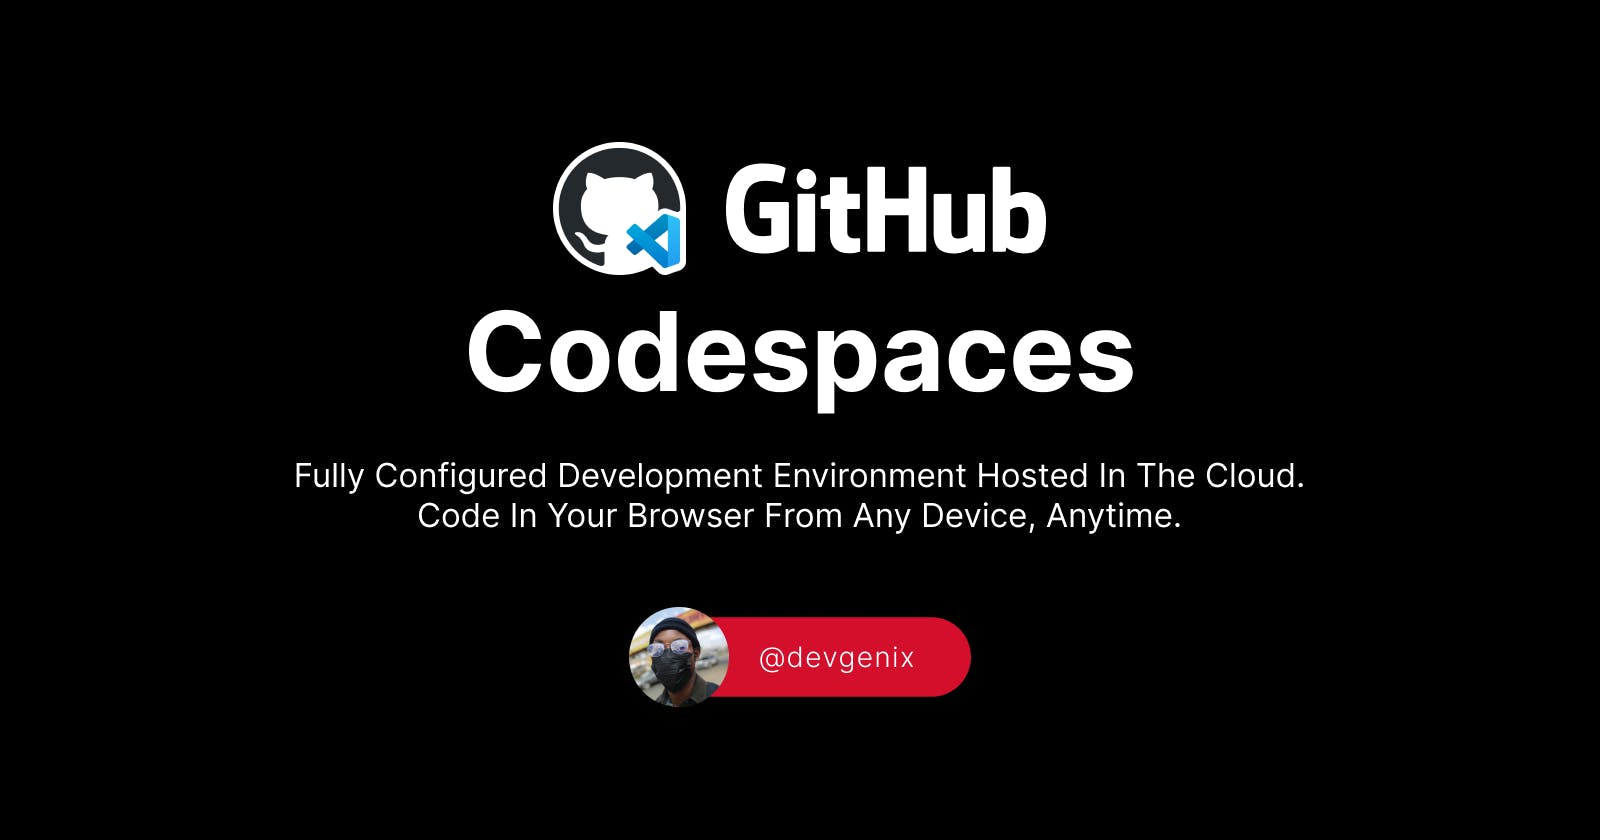 Github Codespaces: Just Wow!